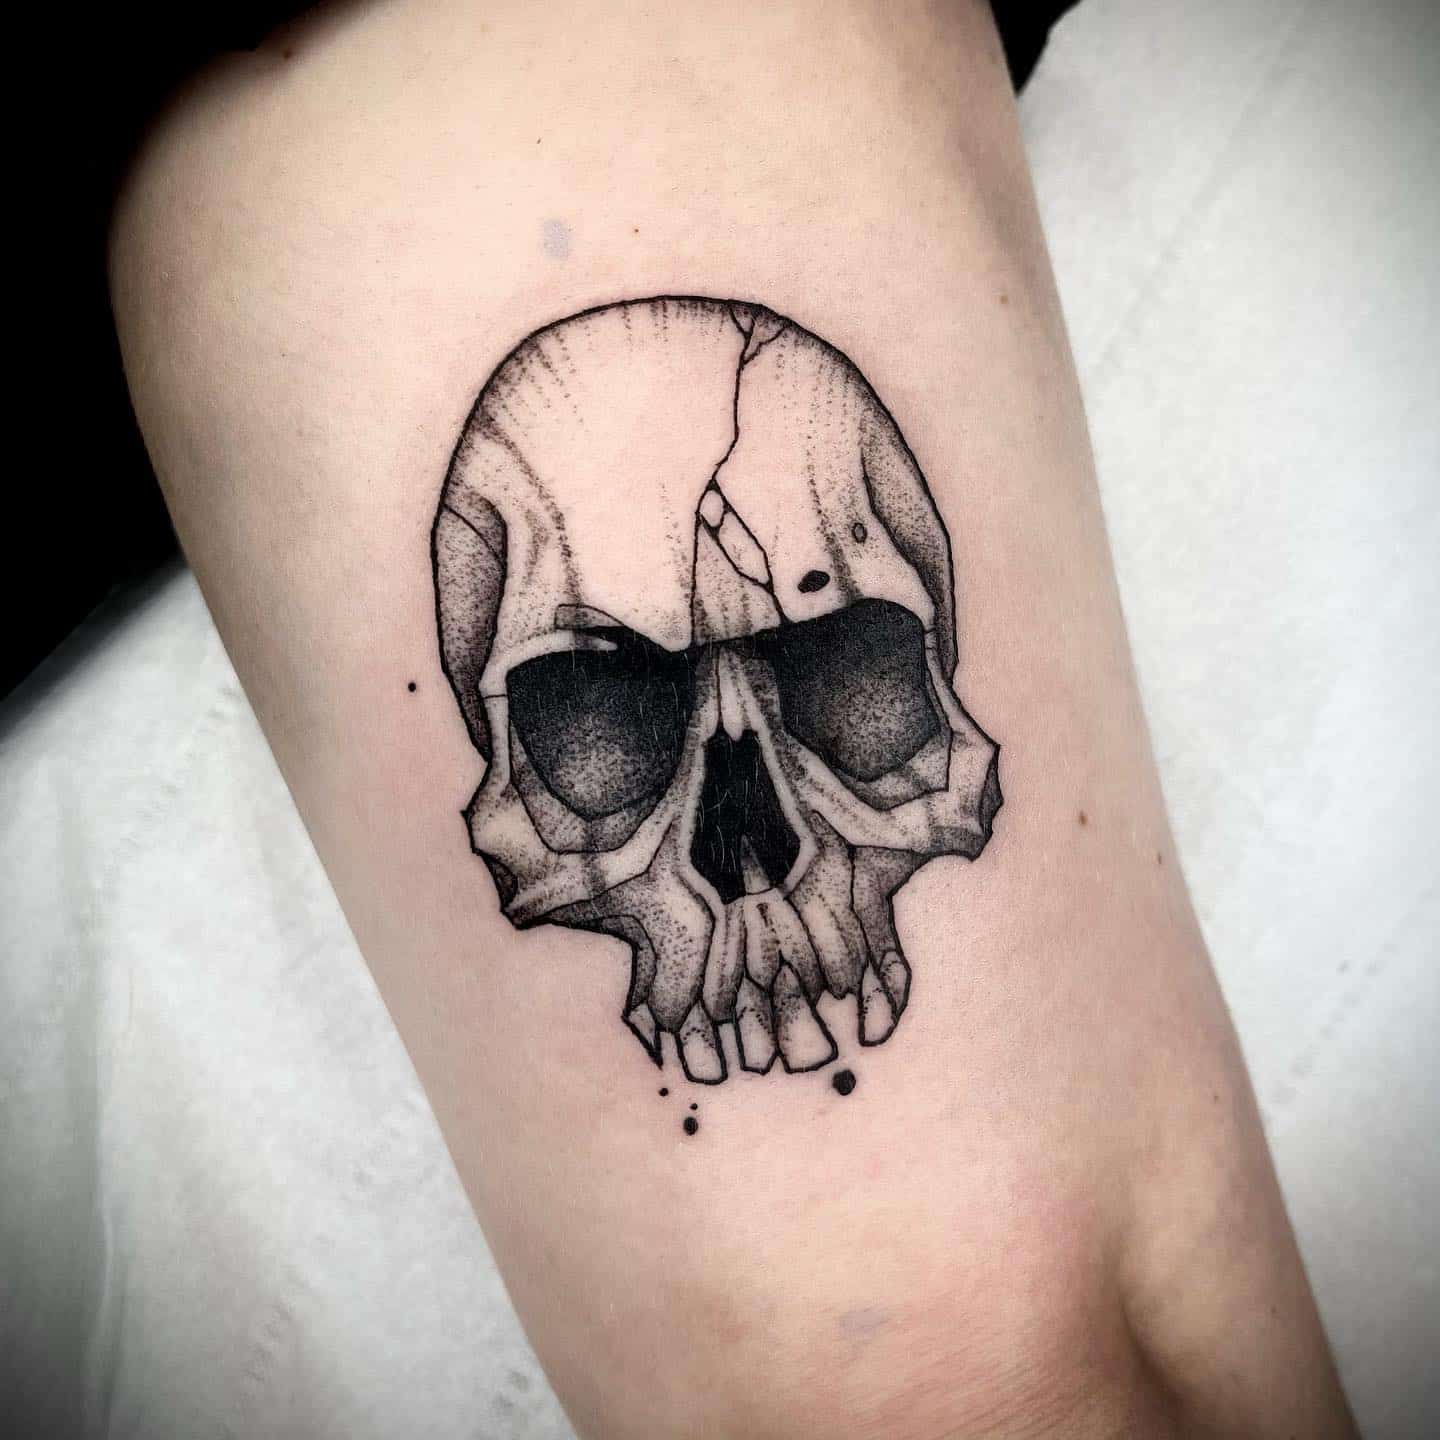 Skull tattoo by art by ady